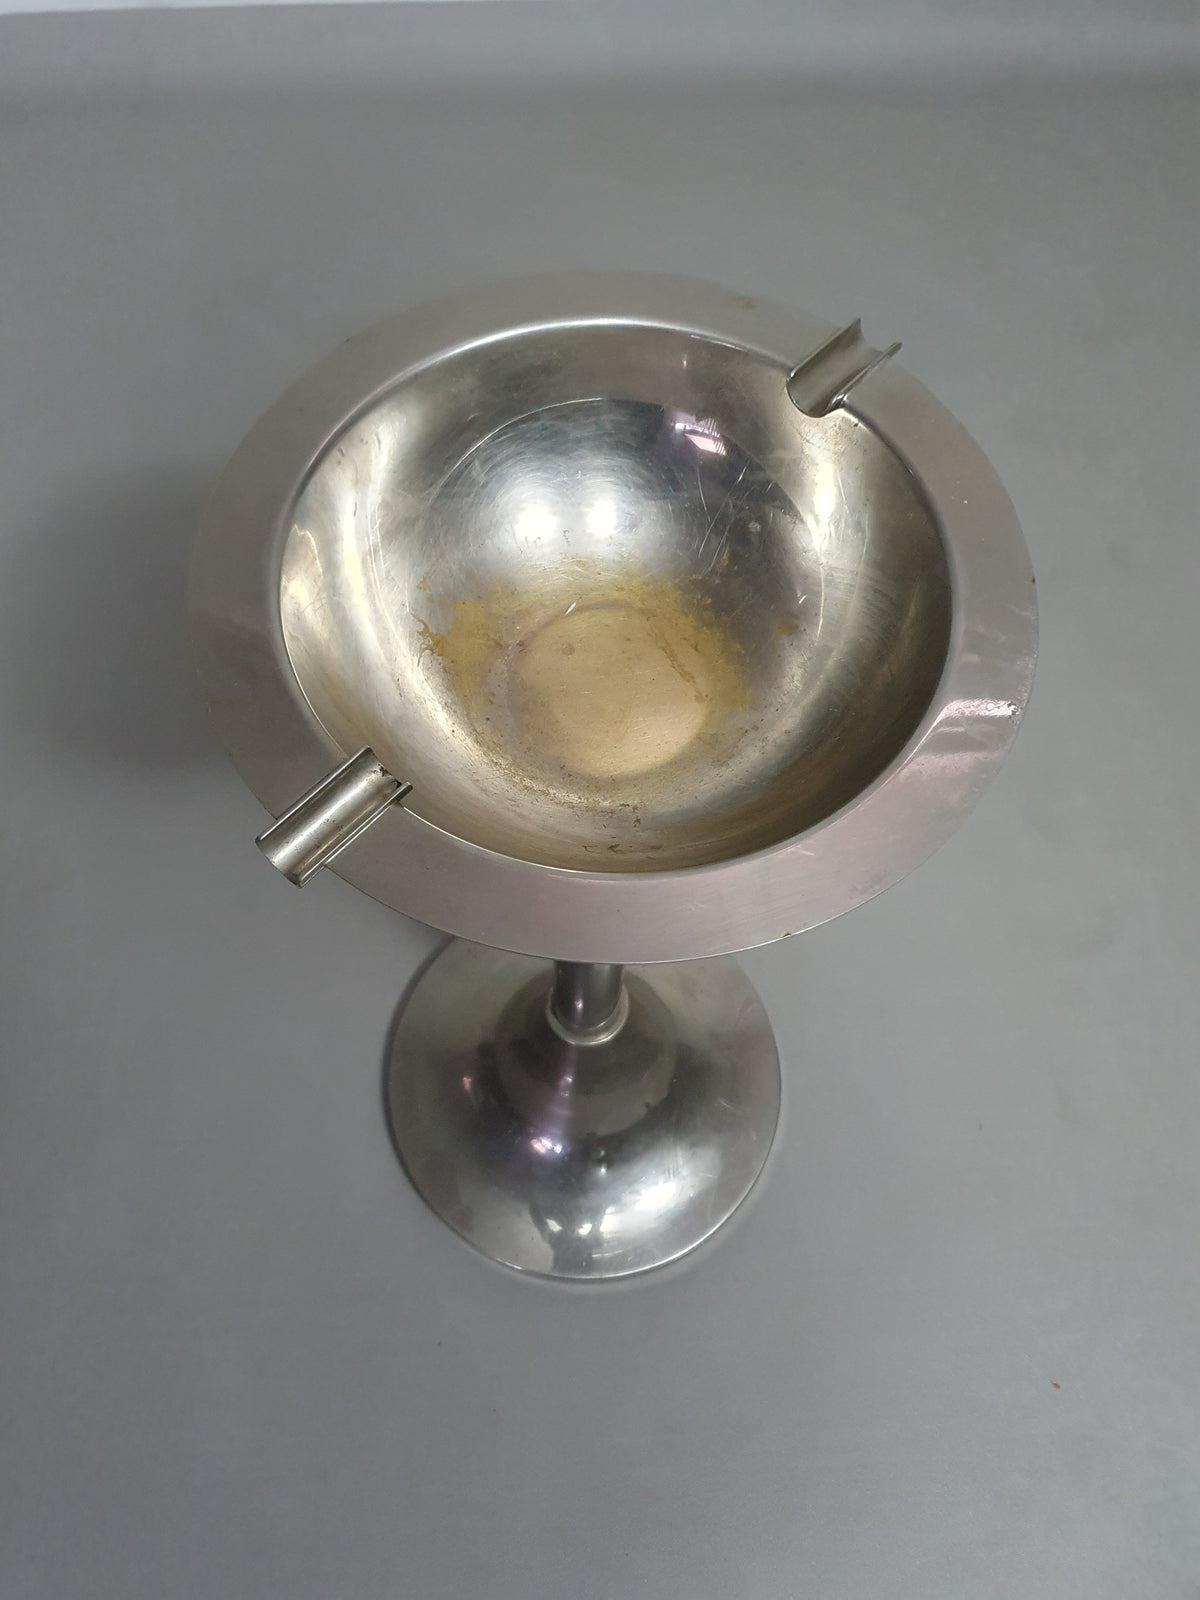 Binox / made in italy / standing ashtray